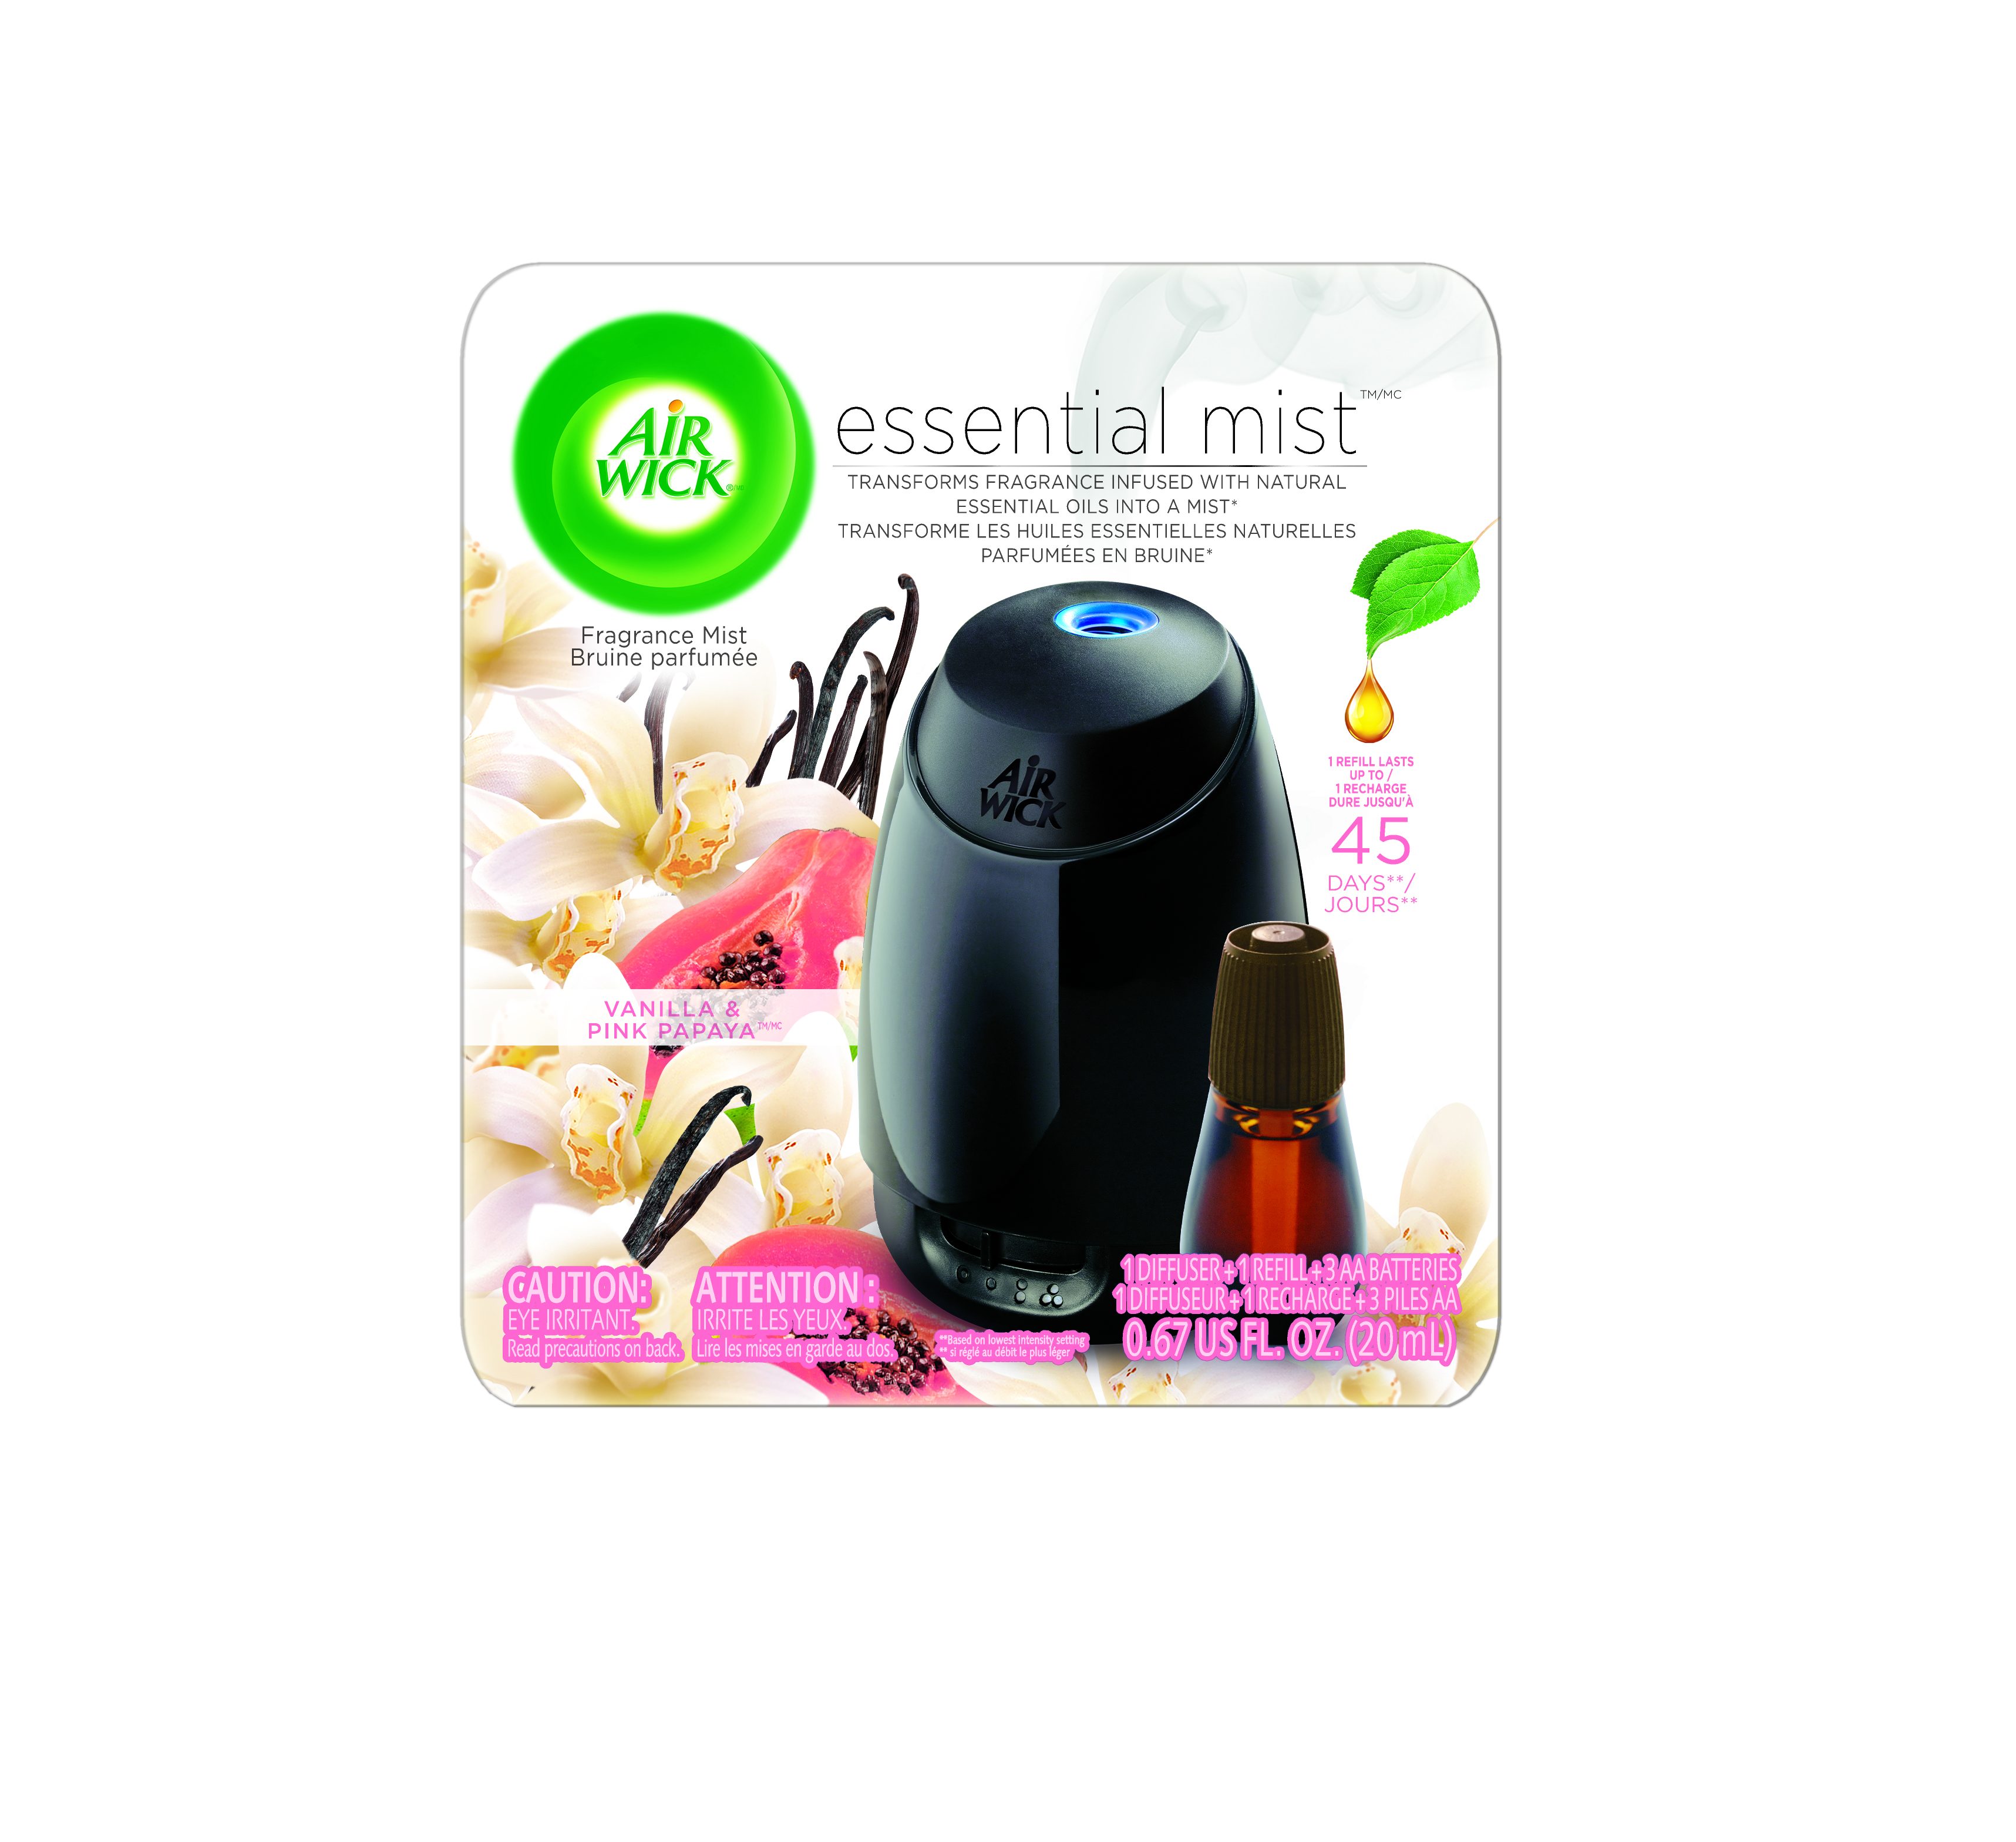 AIR WICK Essential Mist  Vanilla  Pink Papaya  Kit Discontinued